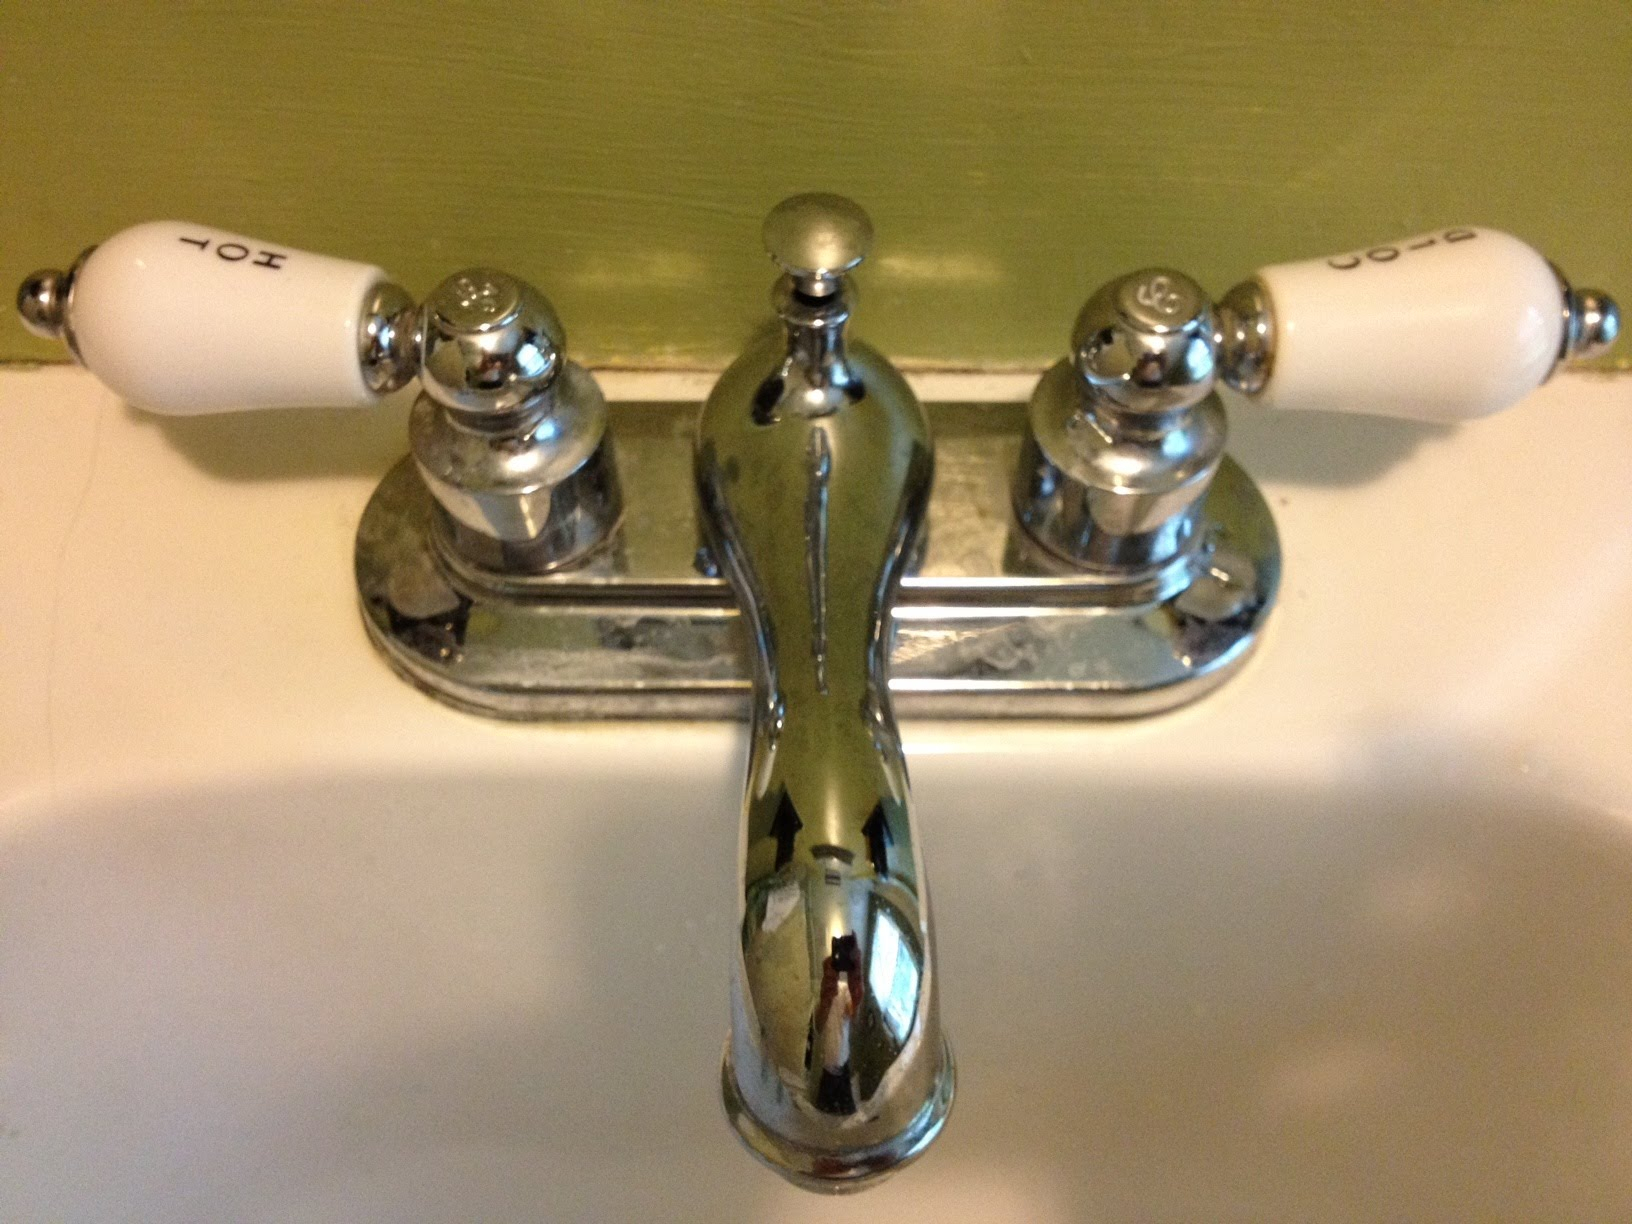 cartridges for vintage bathroom sink faucets